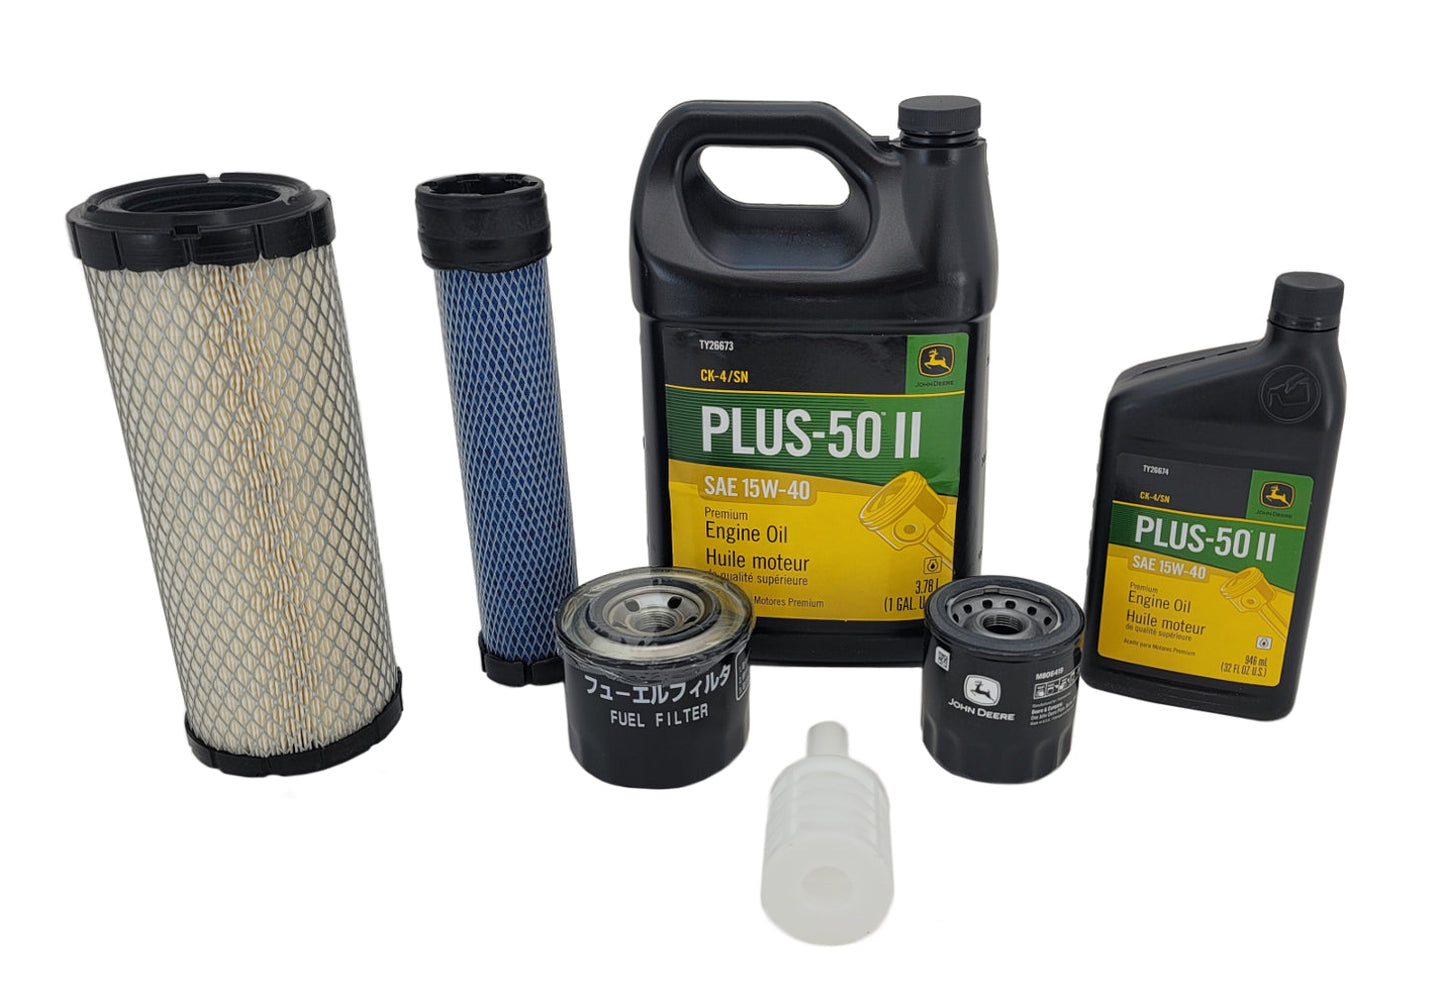 John Deere Original Equipment Filter Pak with Oil Kit - SJ16911A